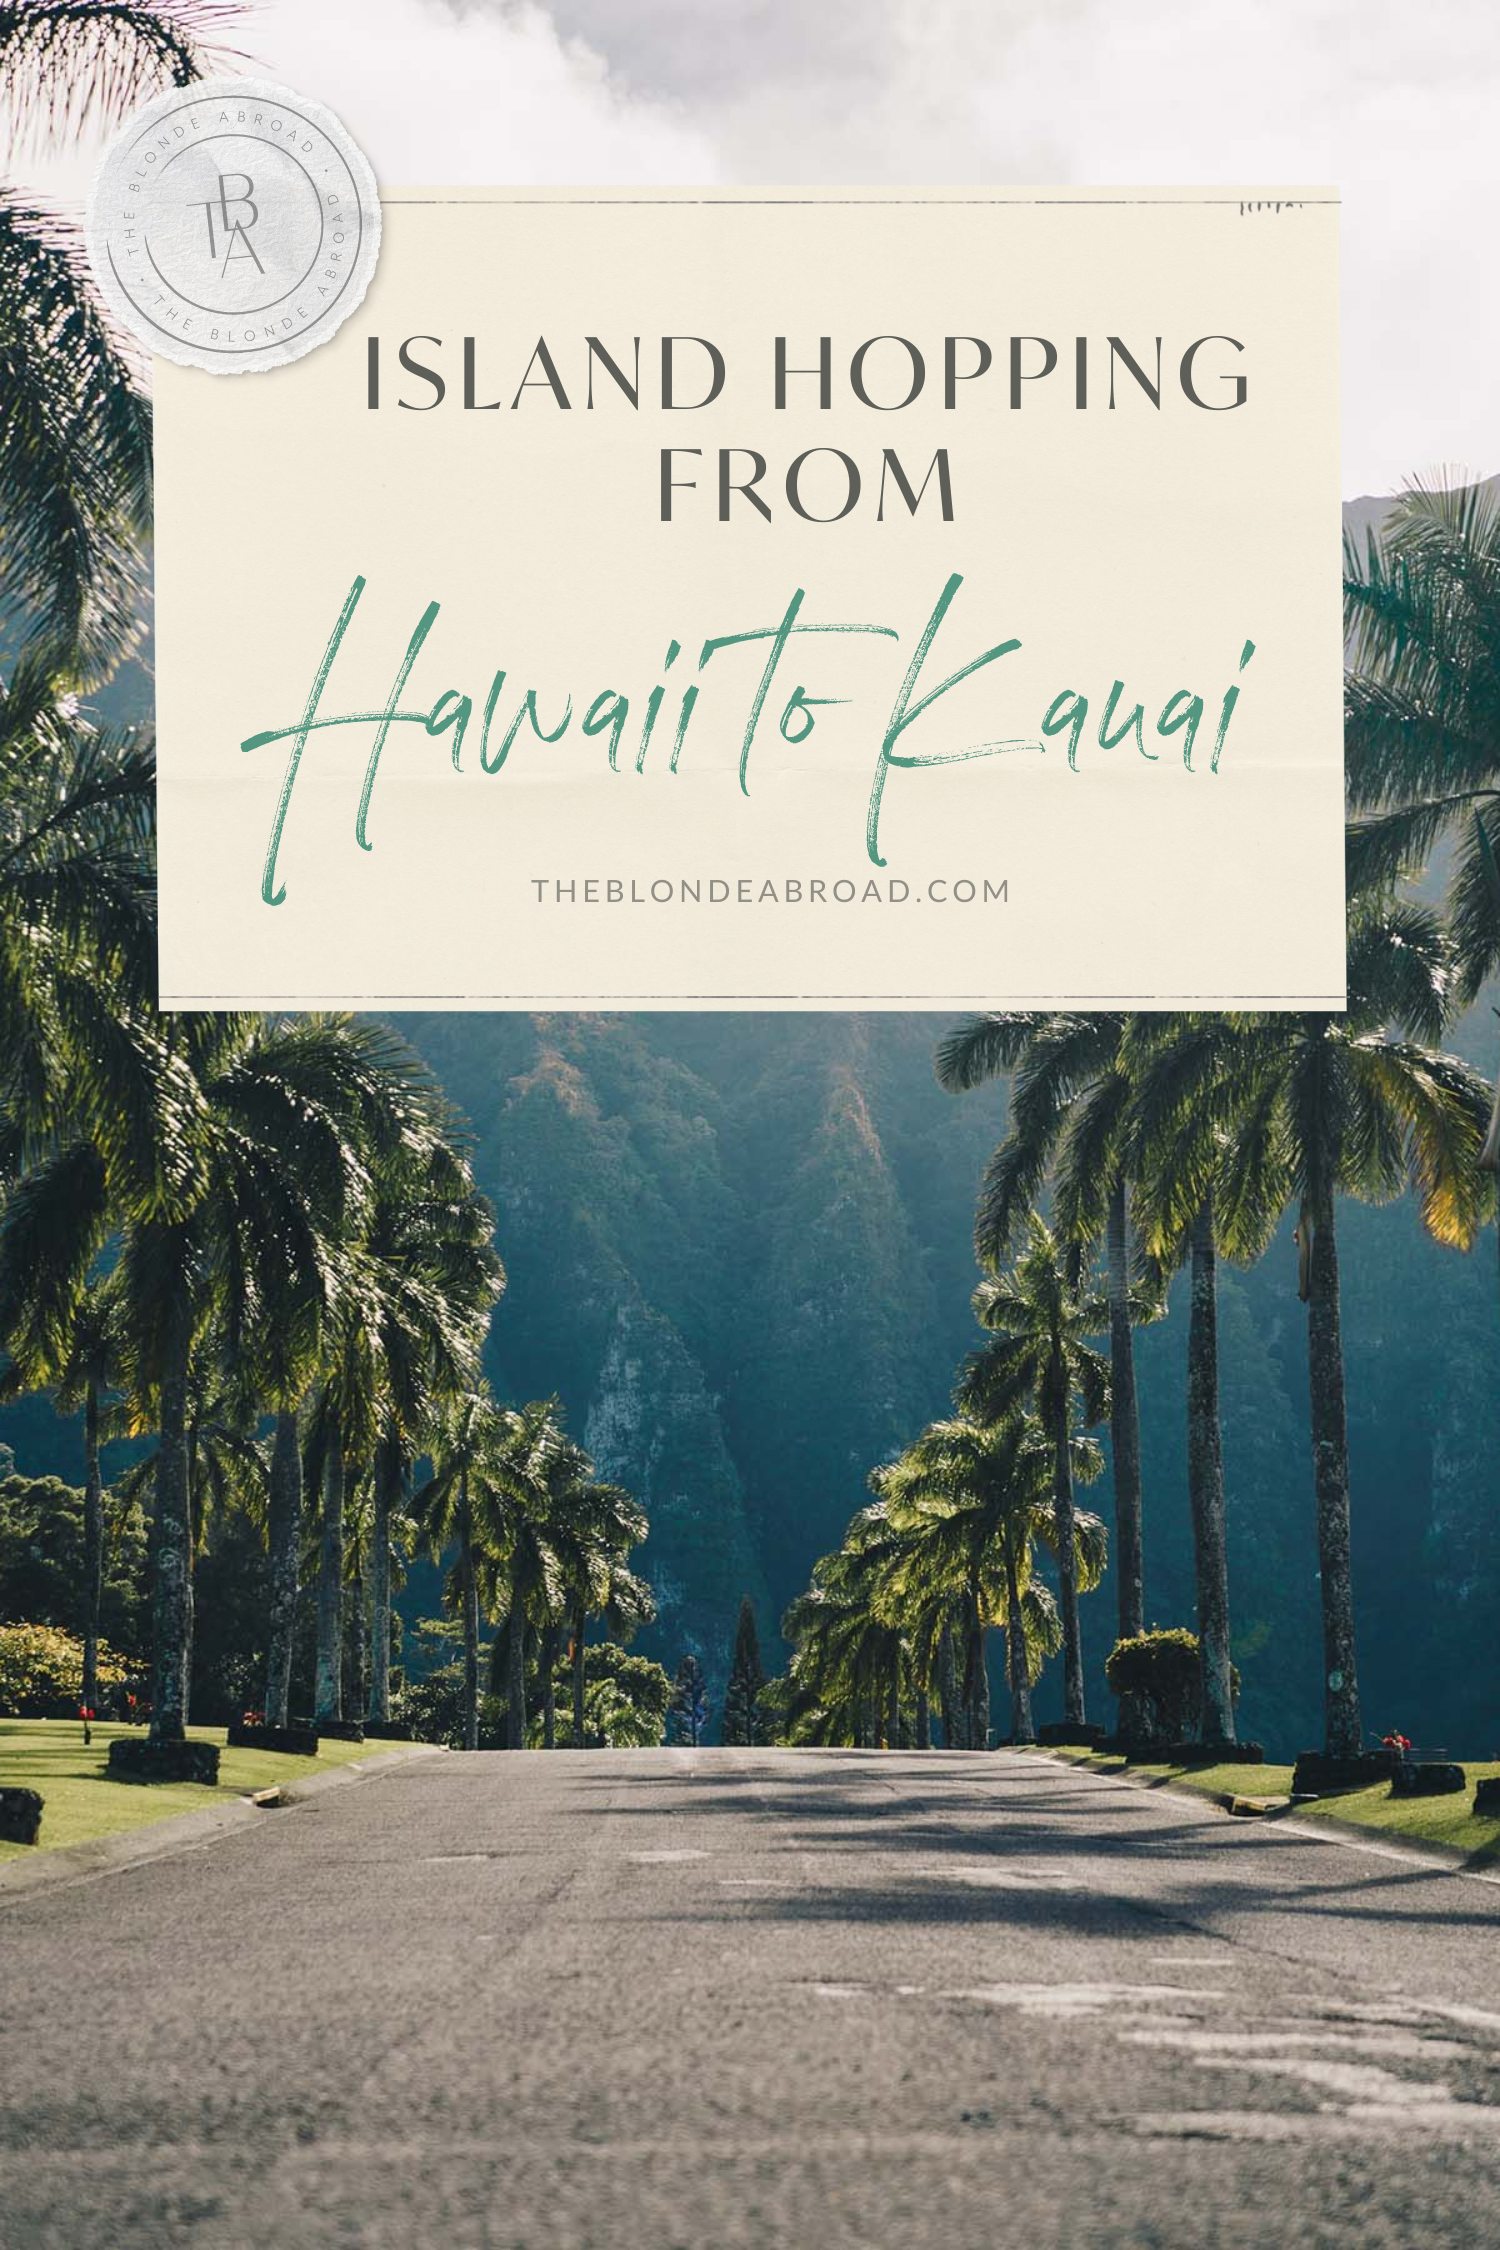 Island Hopping from Island of Hawaii to Kauai
